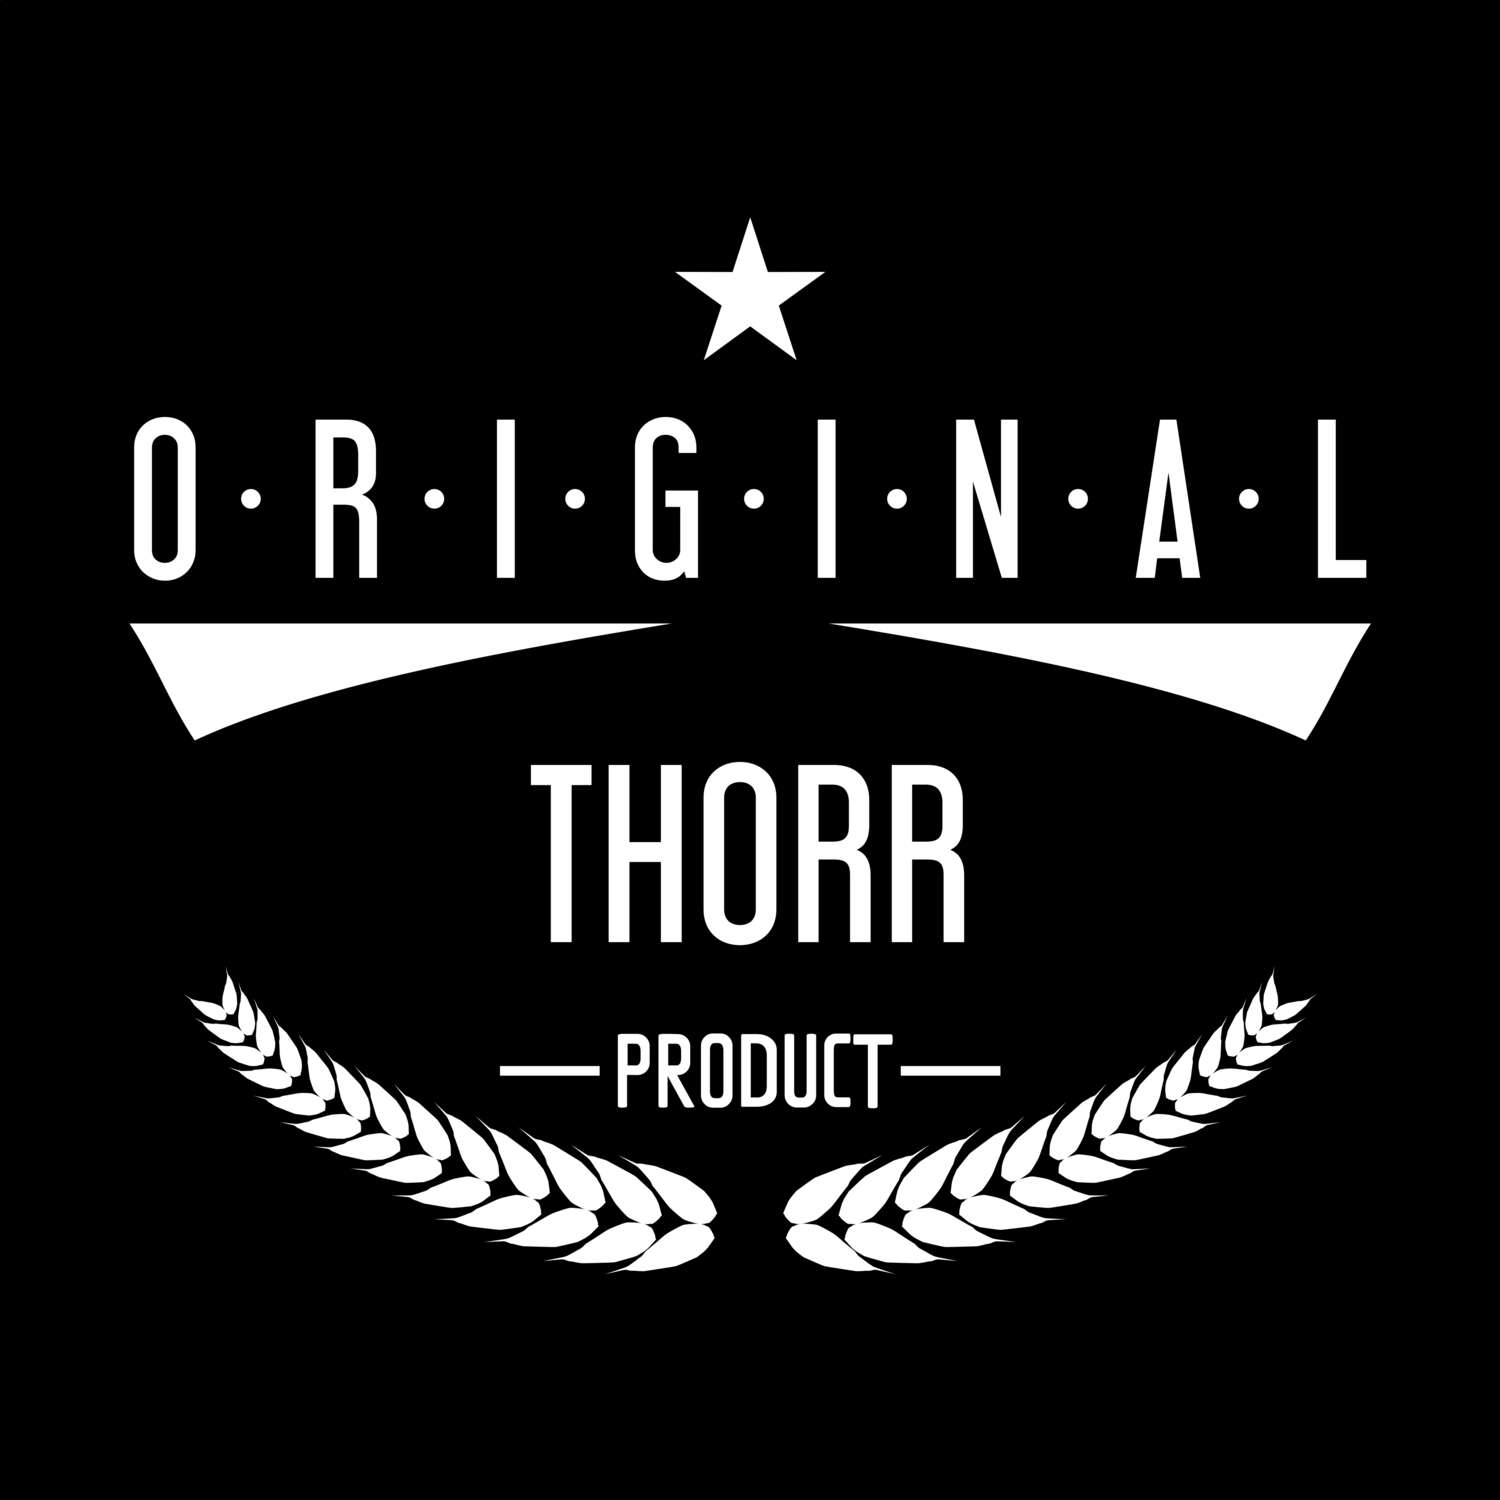 Thorr T-Shirt »Original Product«